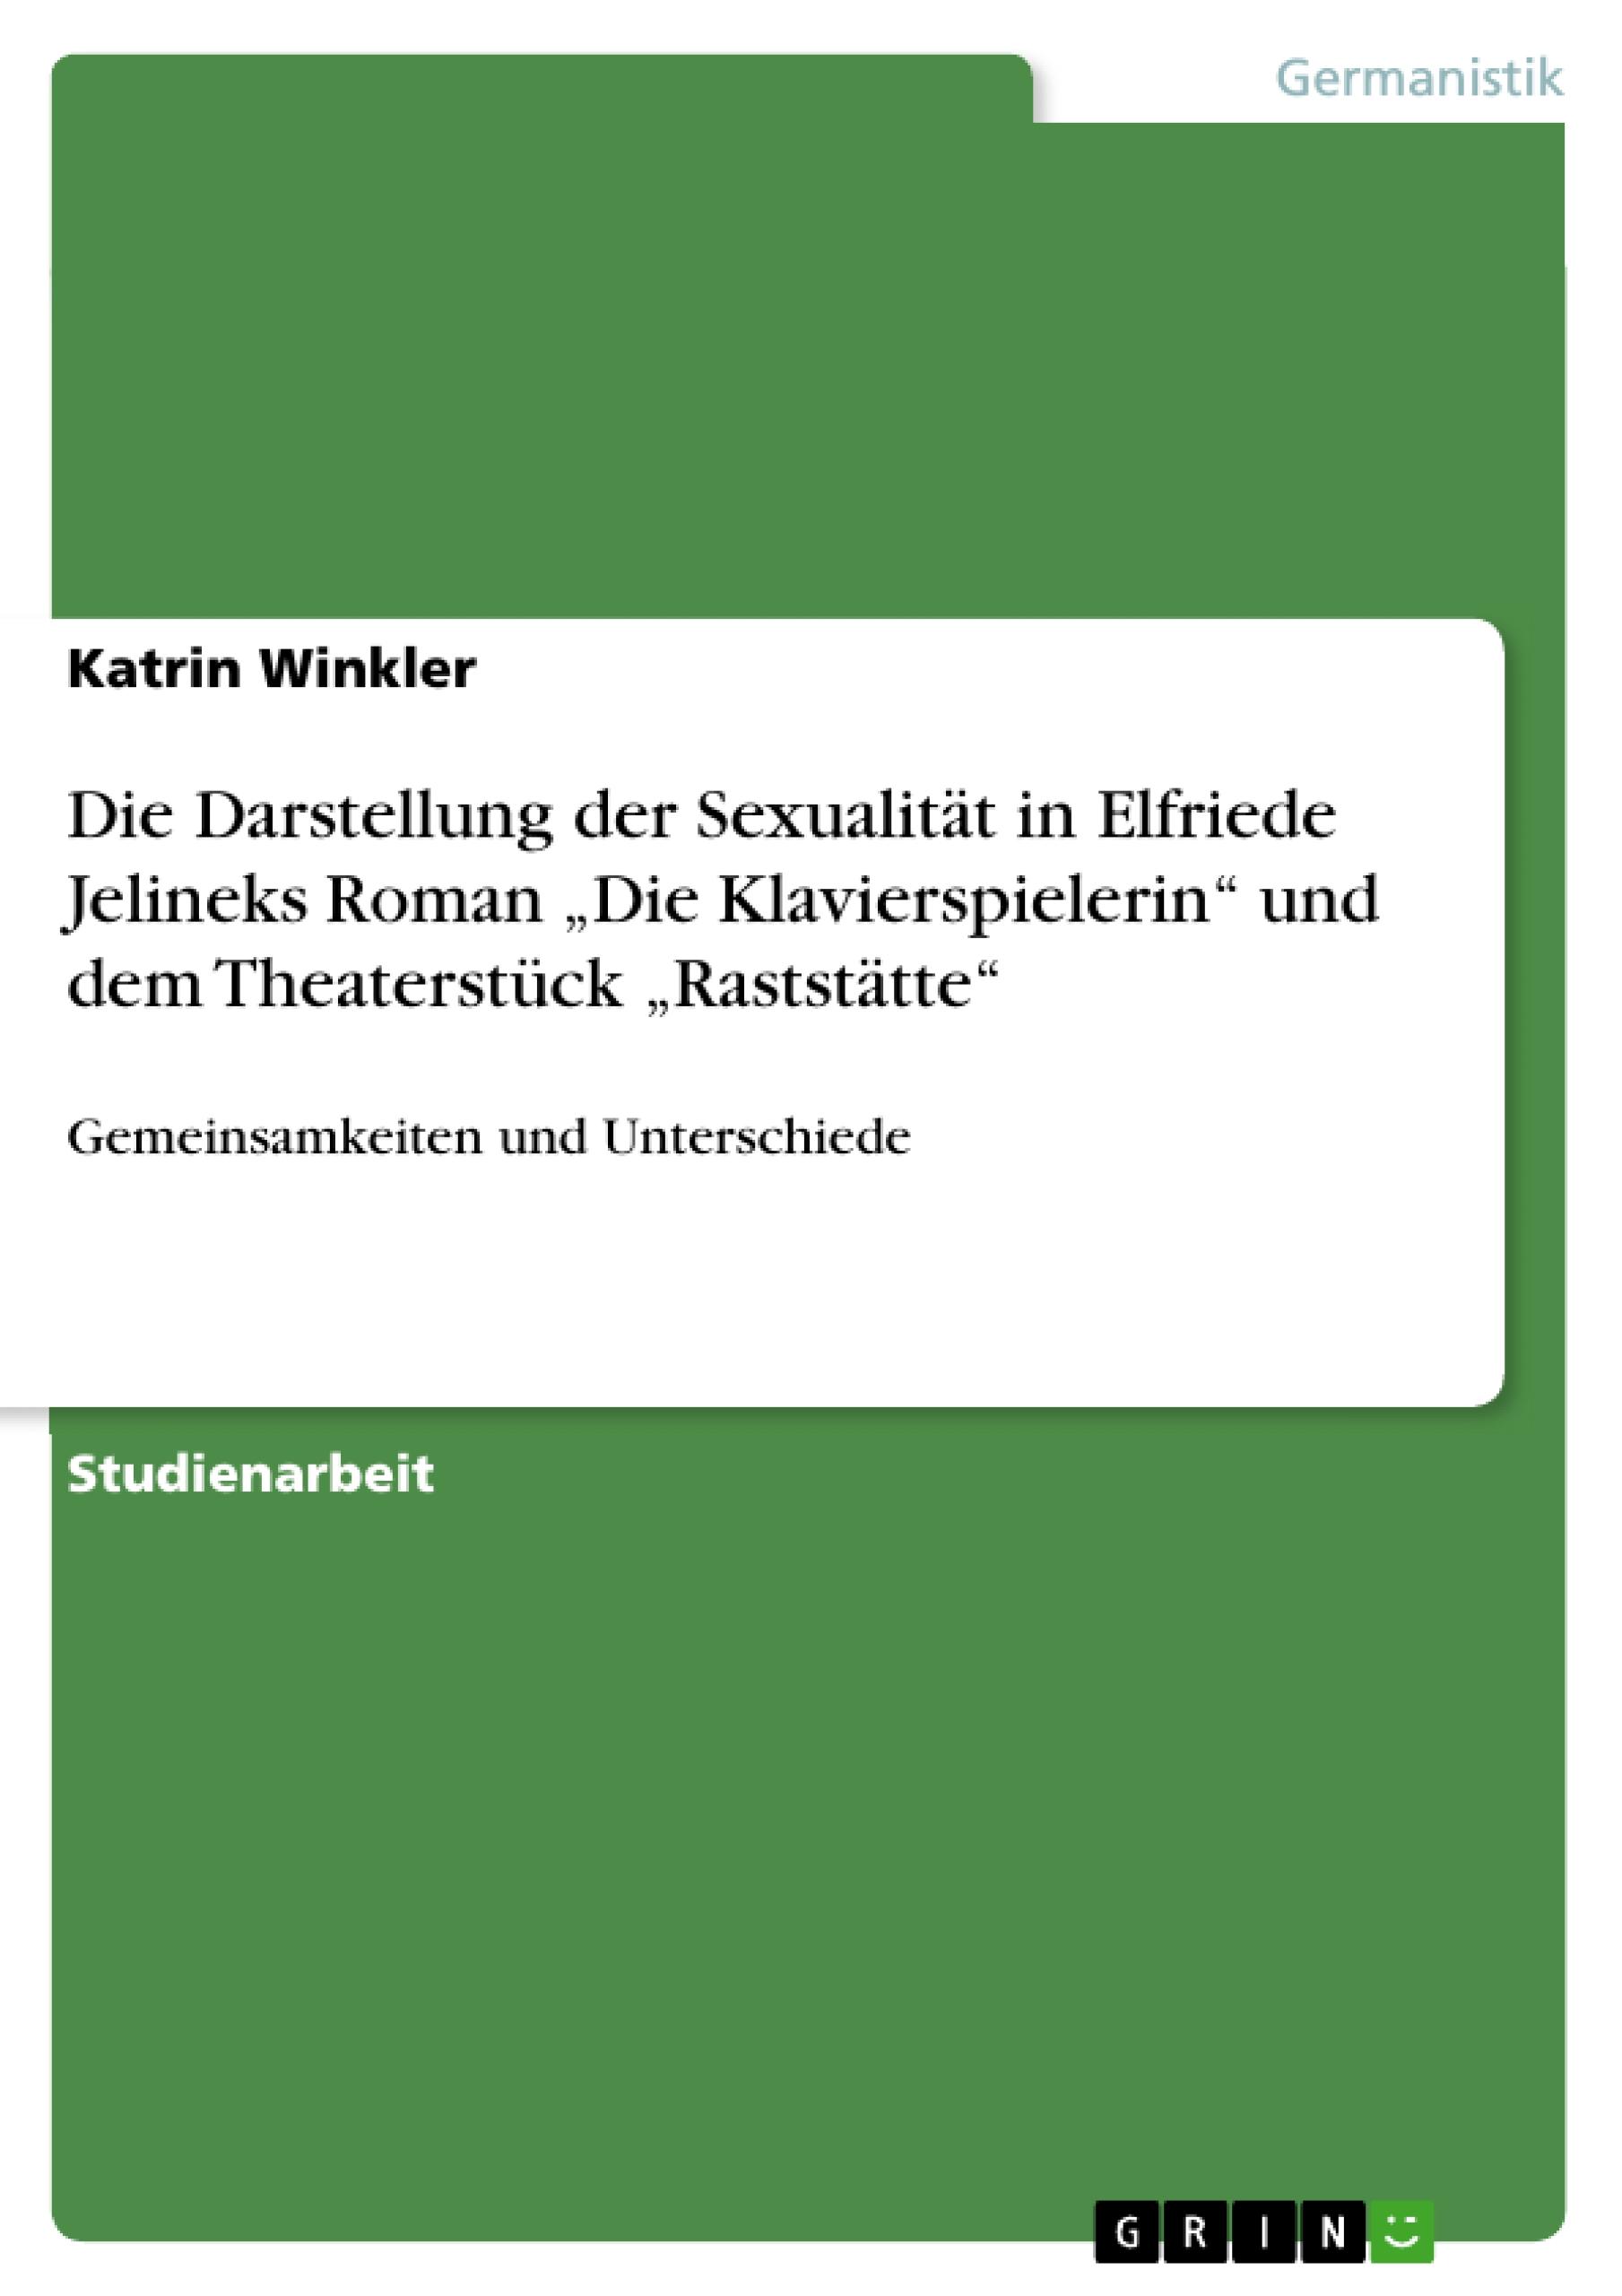 Die Darstellung der Sexualitaet in Elfriede Jelineks Roman  Die Klavierspielerin  und dem Theaterstueck  Raststaette - Winkler, Katrin